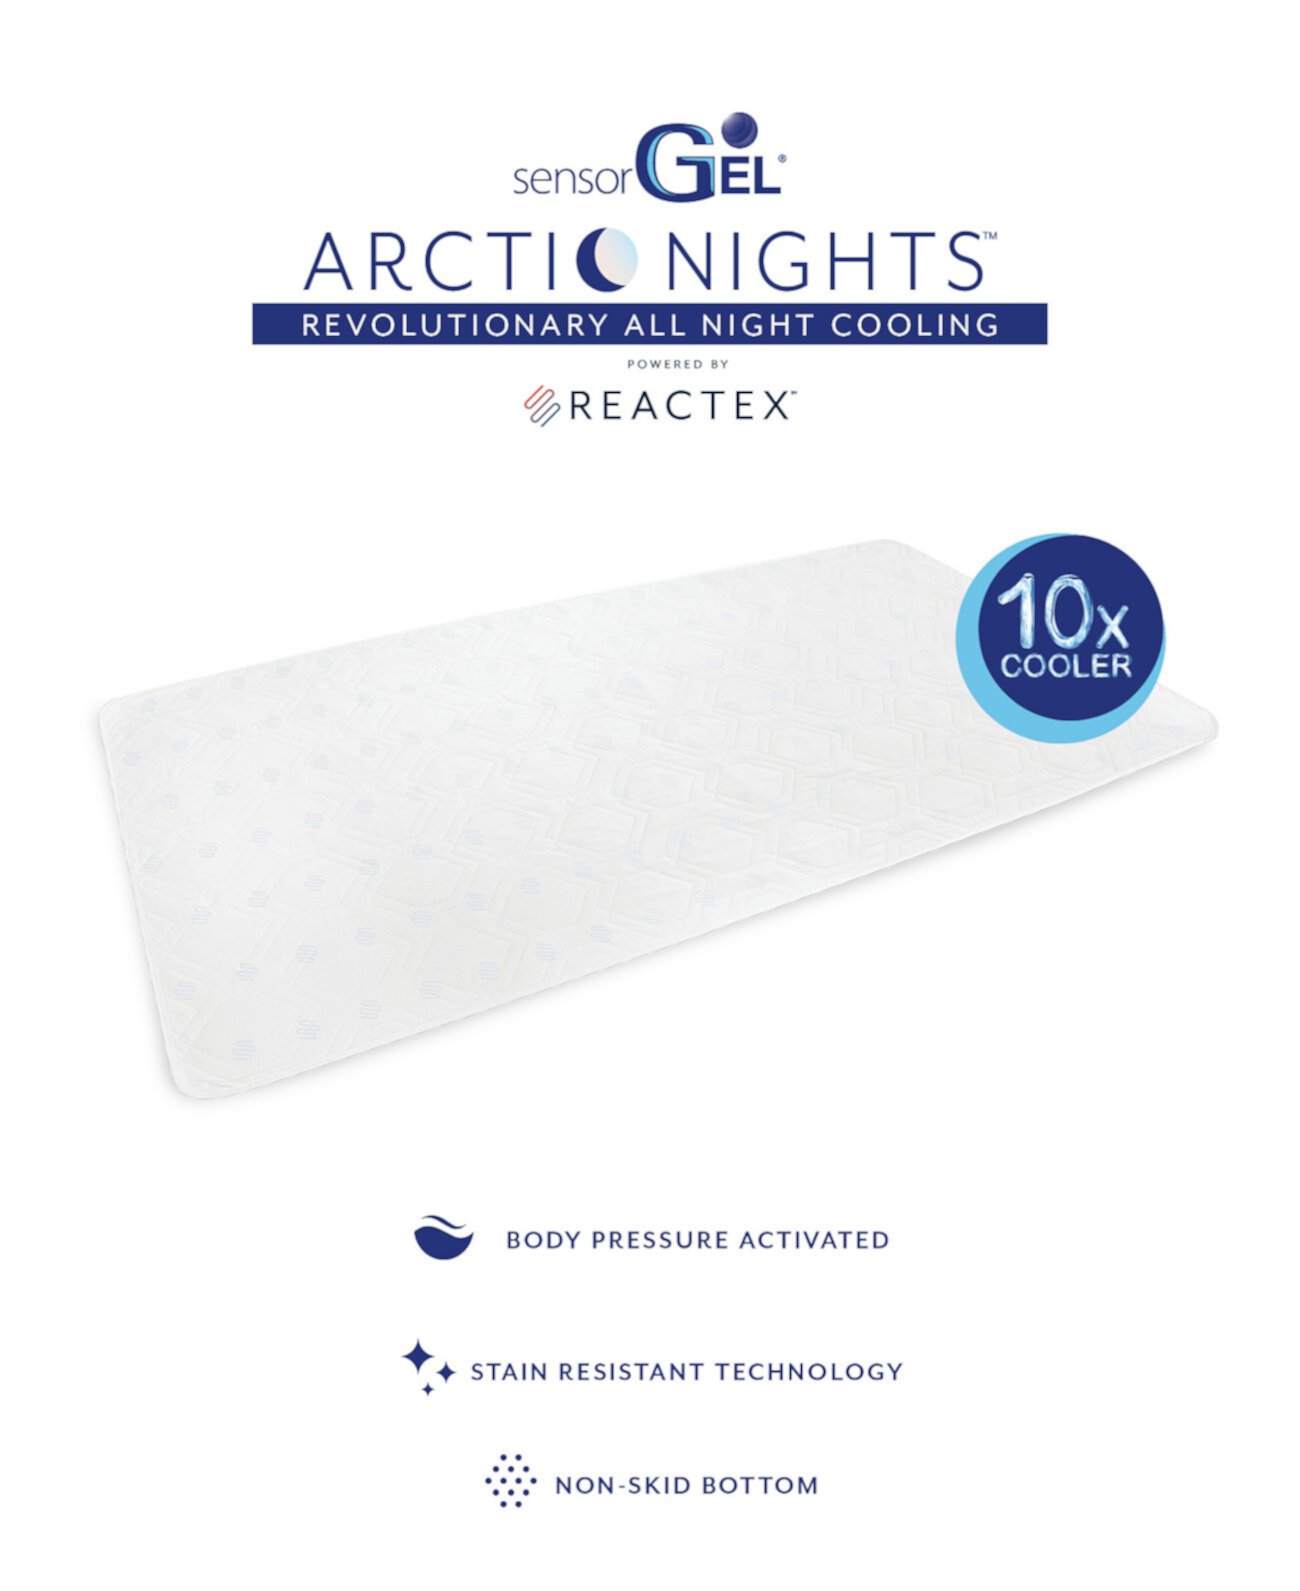 ЗАКРЫТИЕ! Arctic Nights 10x Cooler Personal Cooling Pad 60 дюймов x 30 дюймов на базе REACTEX SensorGel